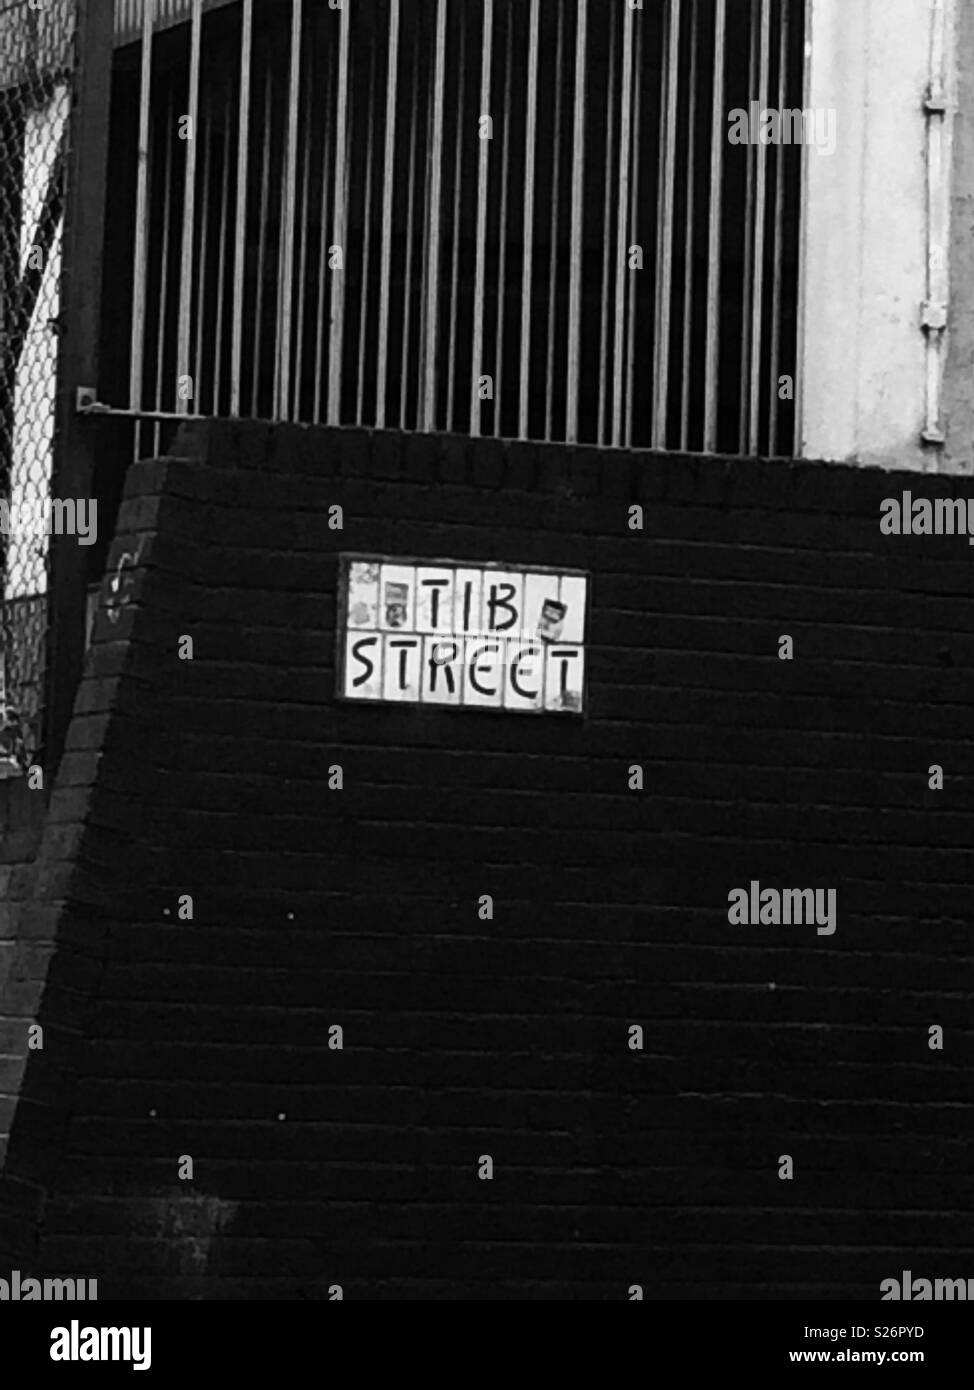 Tib Street sign, Manchester Stock Photo